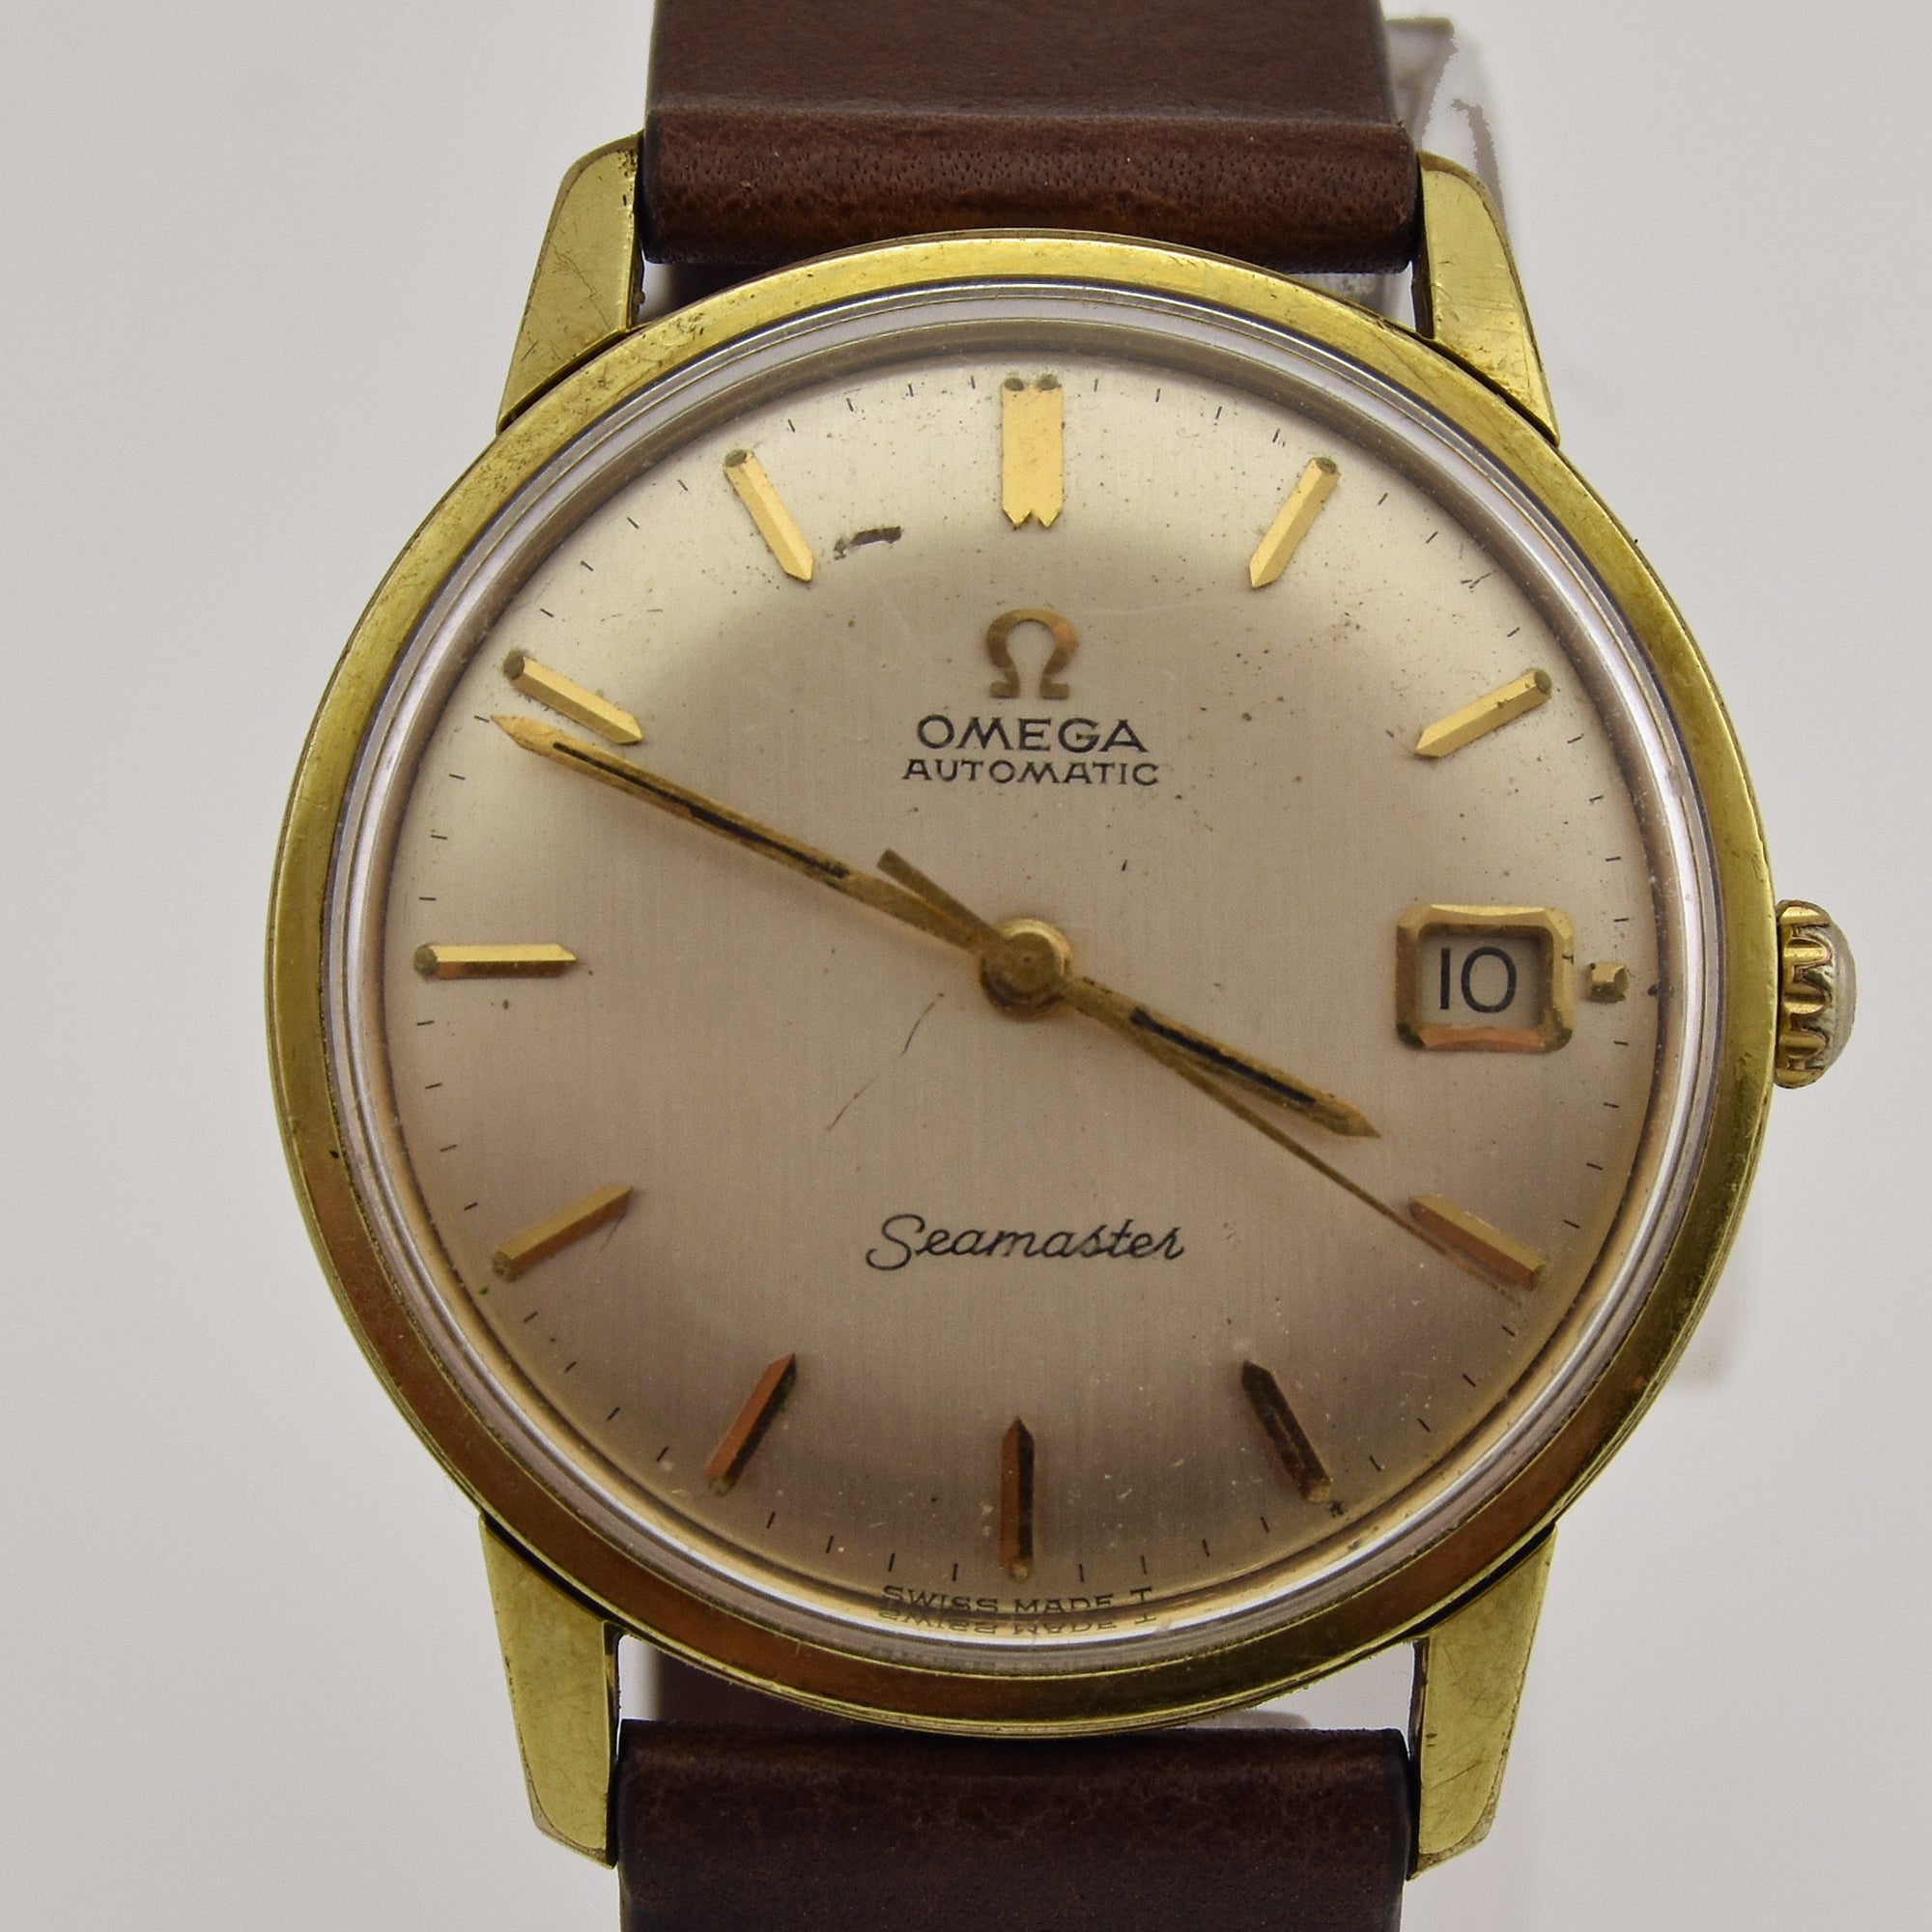 1965 Swiss Omega Seamaster wrist watch with date